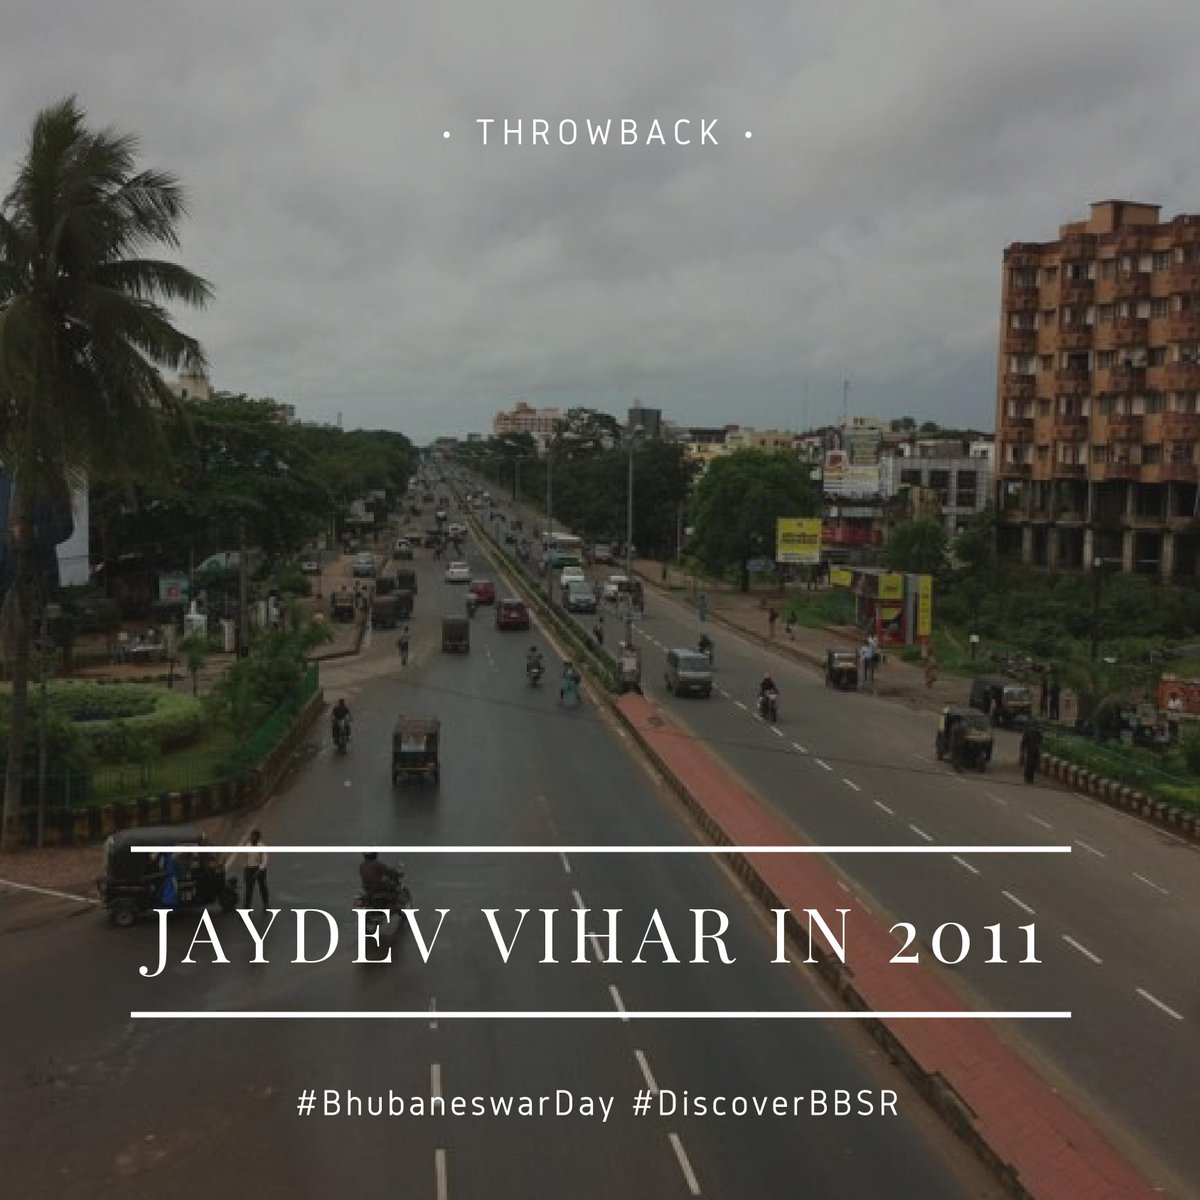 Here's what Jaydev Vihar looked like in 2011. 

#Bhubaneswar #BhubaneswarDay #Throwback #Odisha